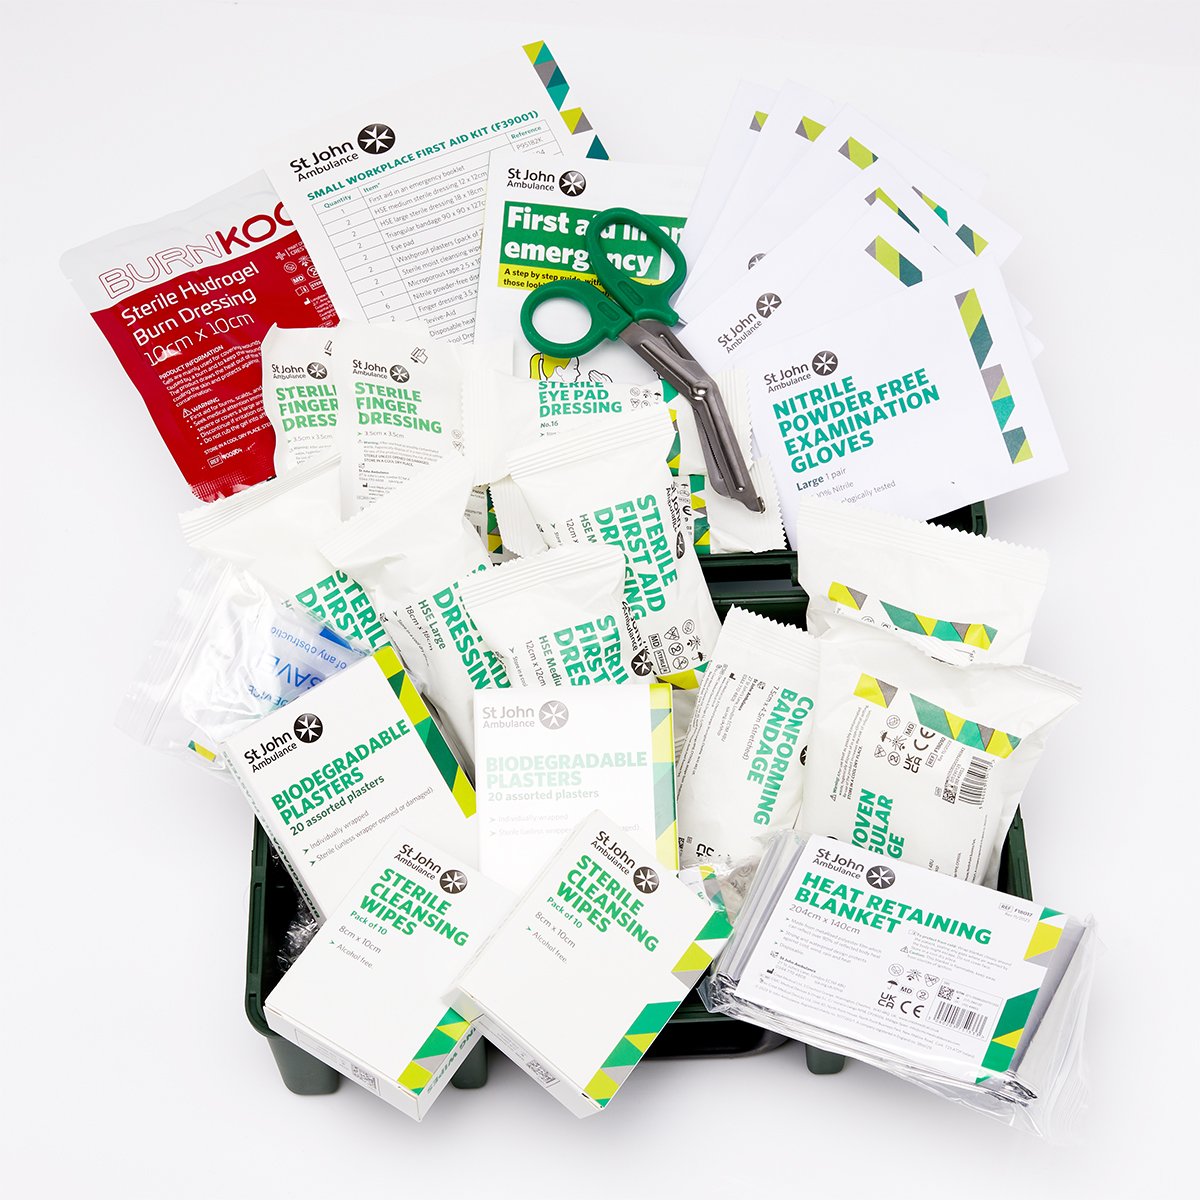 St John Ambulance Small Workplace First Aid Kit BS-8599-1:2019